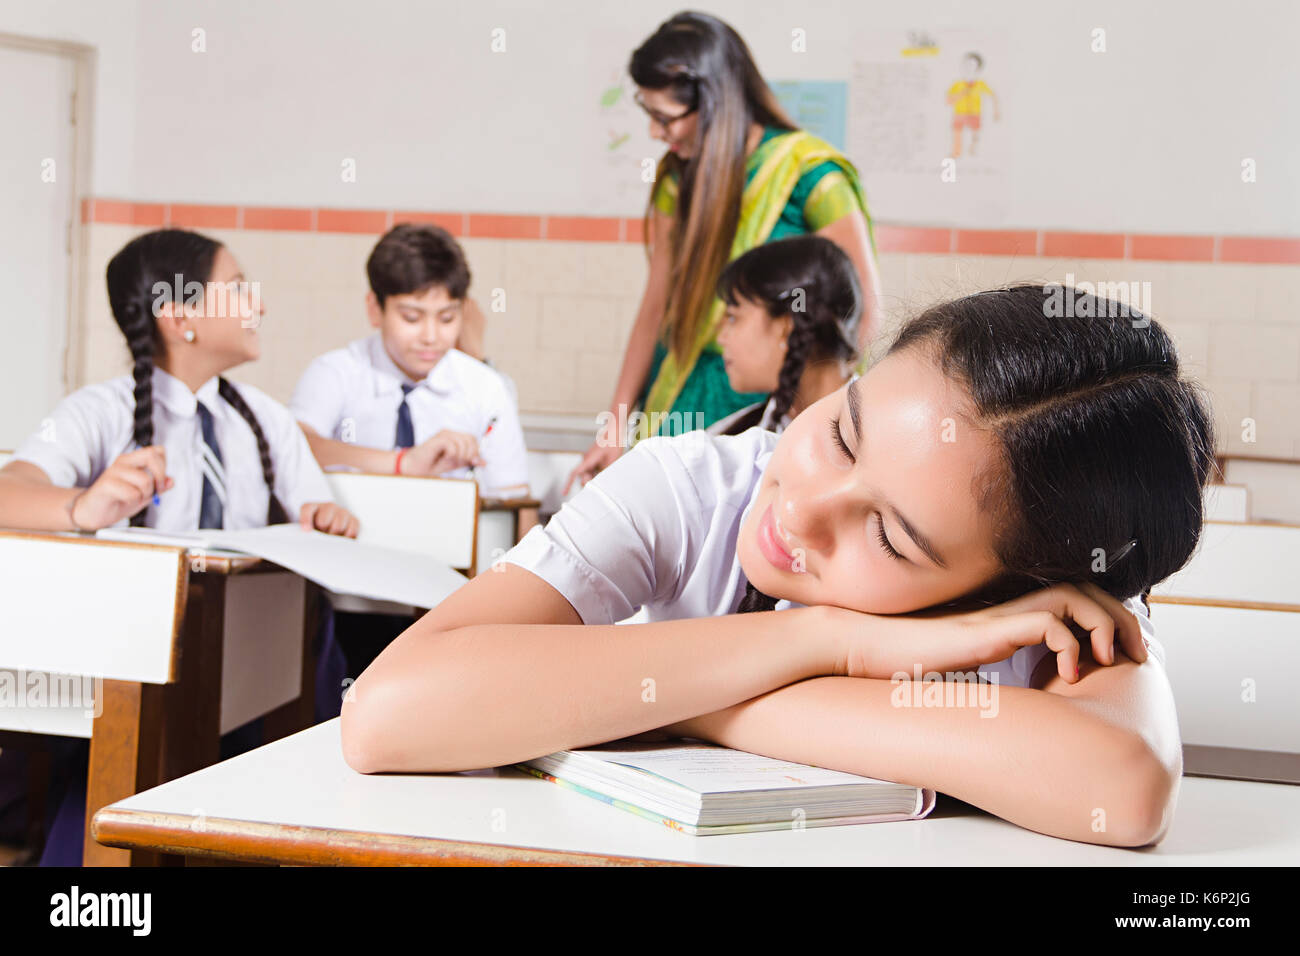 1 Indian Girl High School Student Sleeping In Classroom Stock Photo